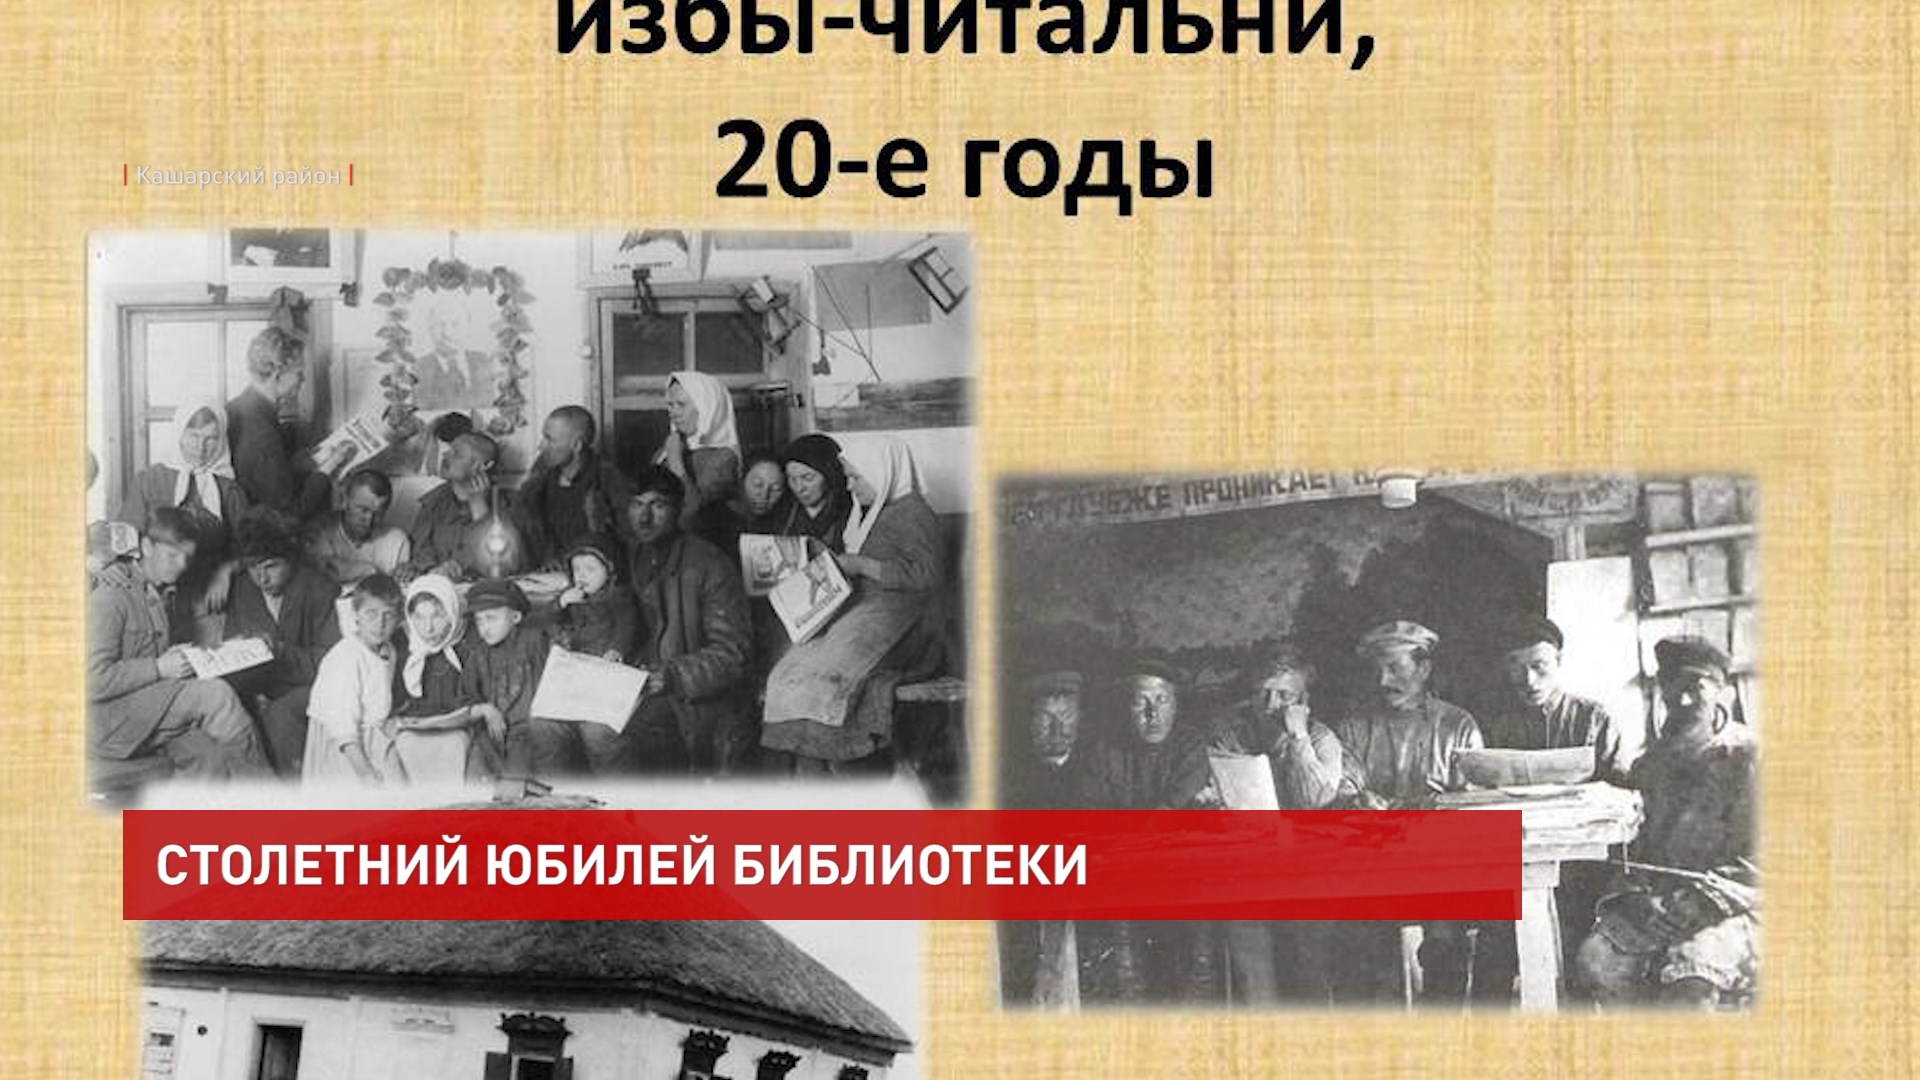 100 летний юбилей отметил журнал республики башкортостан